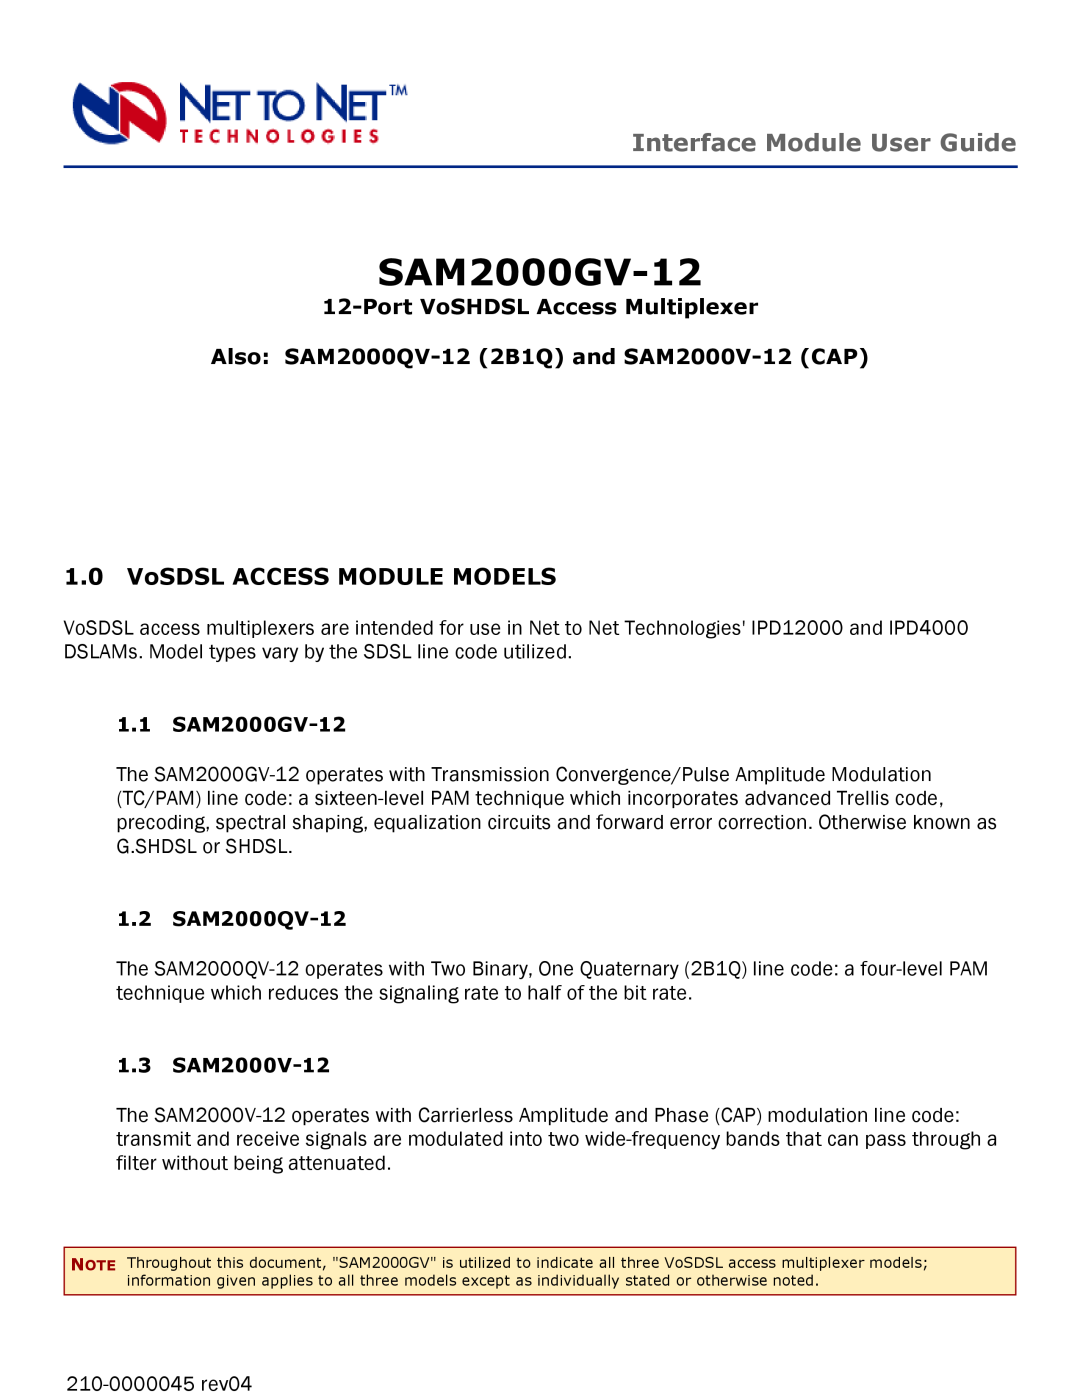 Paradyne SAM2000V-12, SAM2000QV-12 manual VoSDSL ACCESS MODULE MODELS, SAM2000GV-12, Interface Module User Guide 